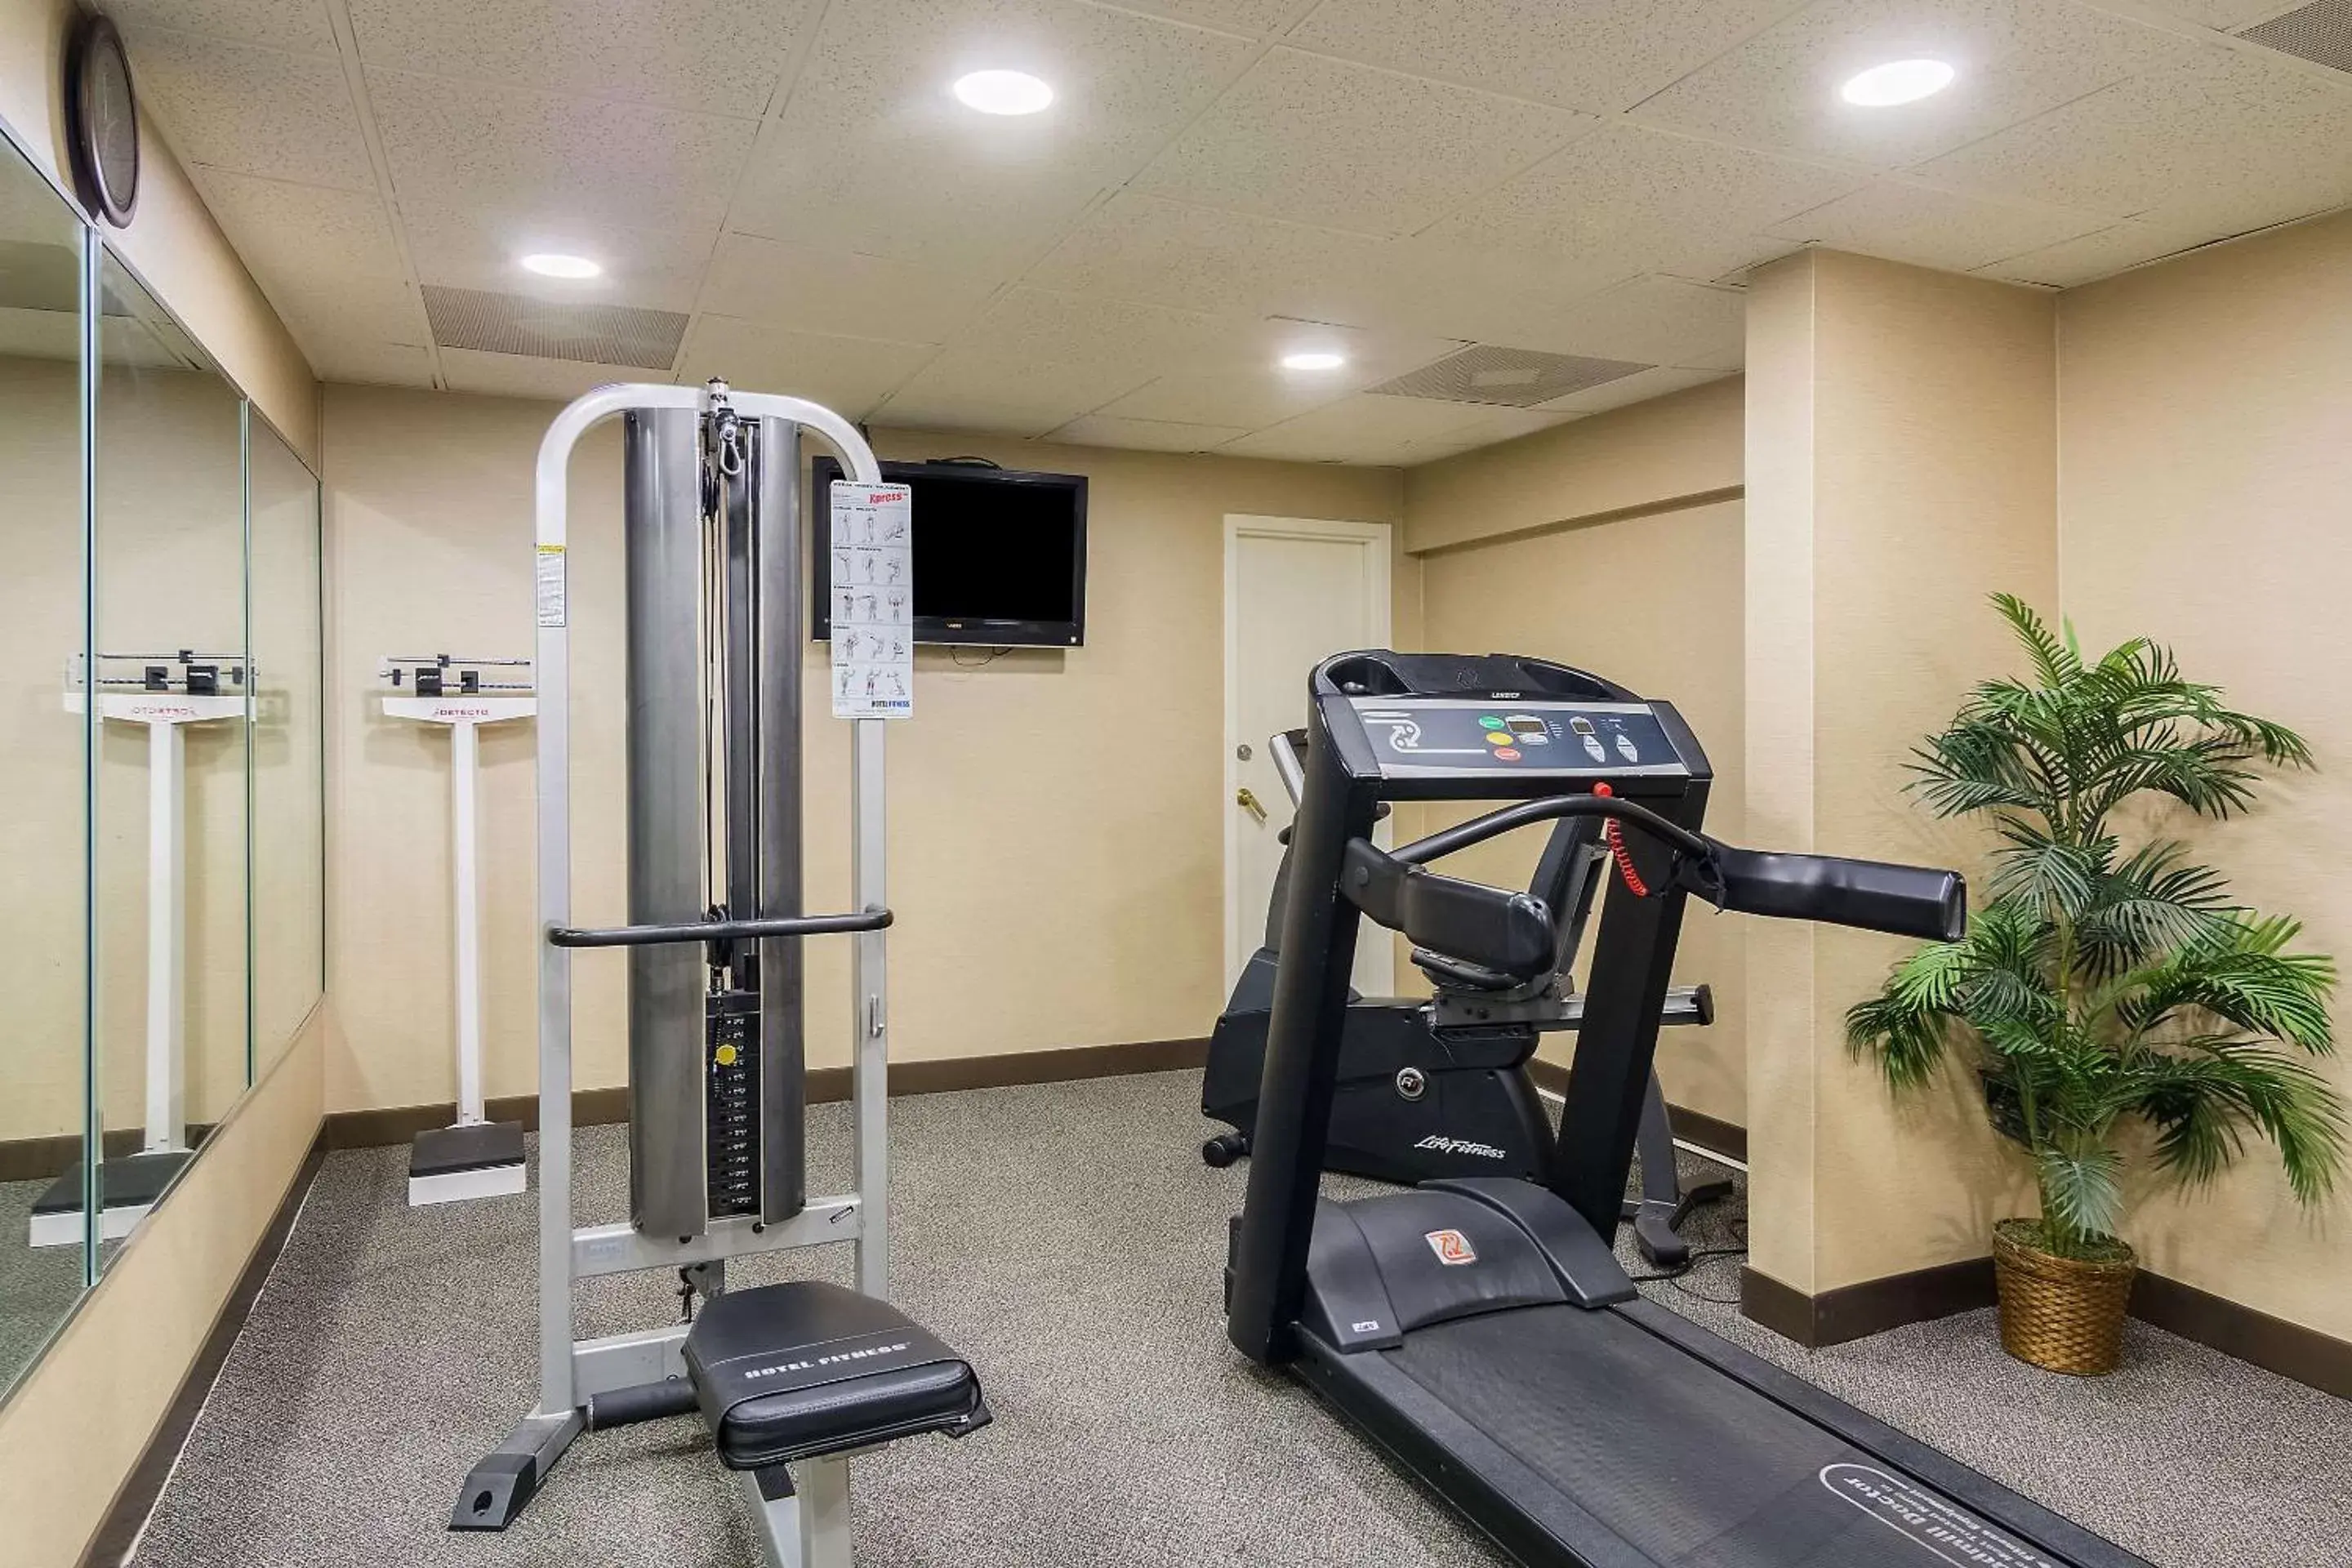 Fitness centre/facilities, Fitness Center/Facilities in Comfort Inn Pensacola - University Area